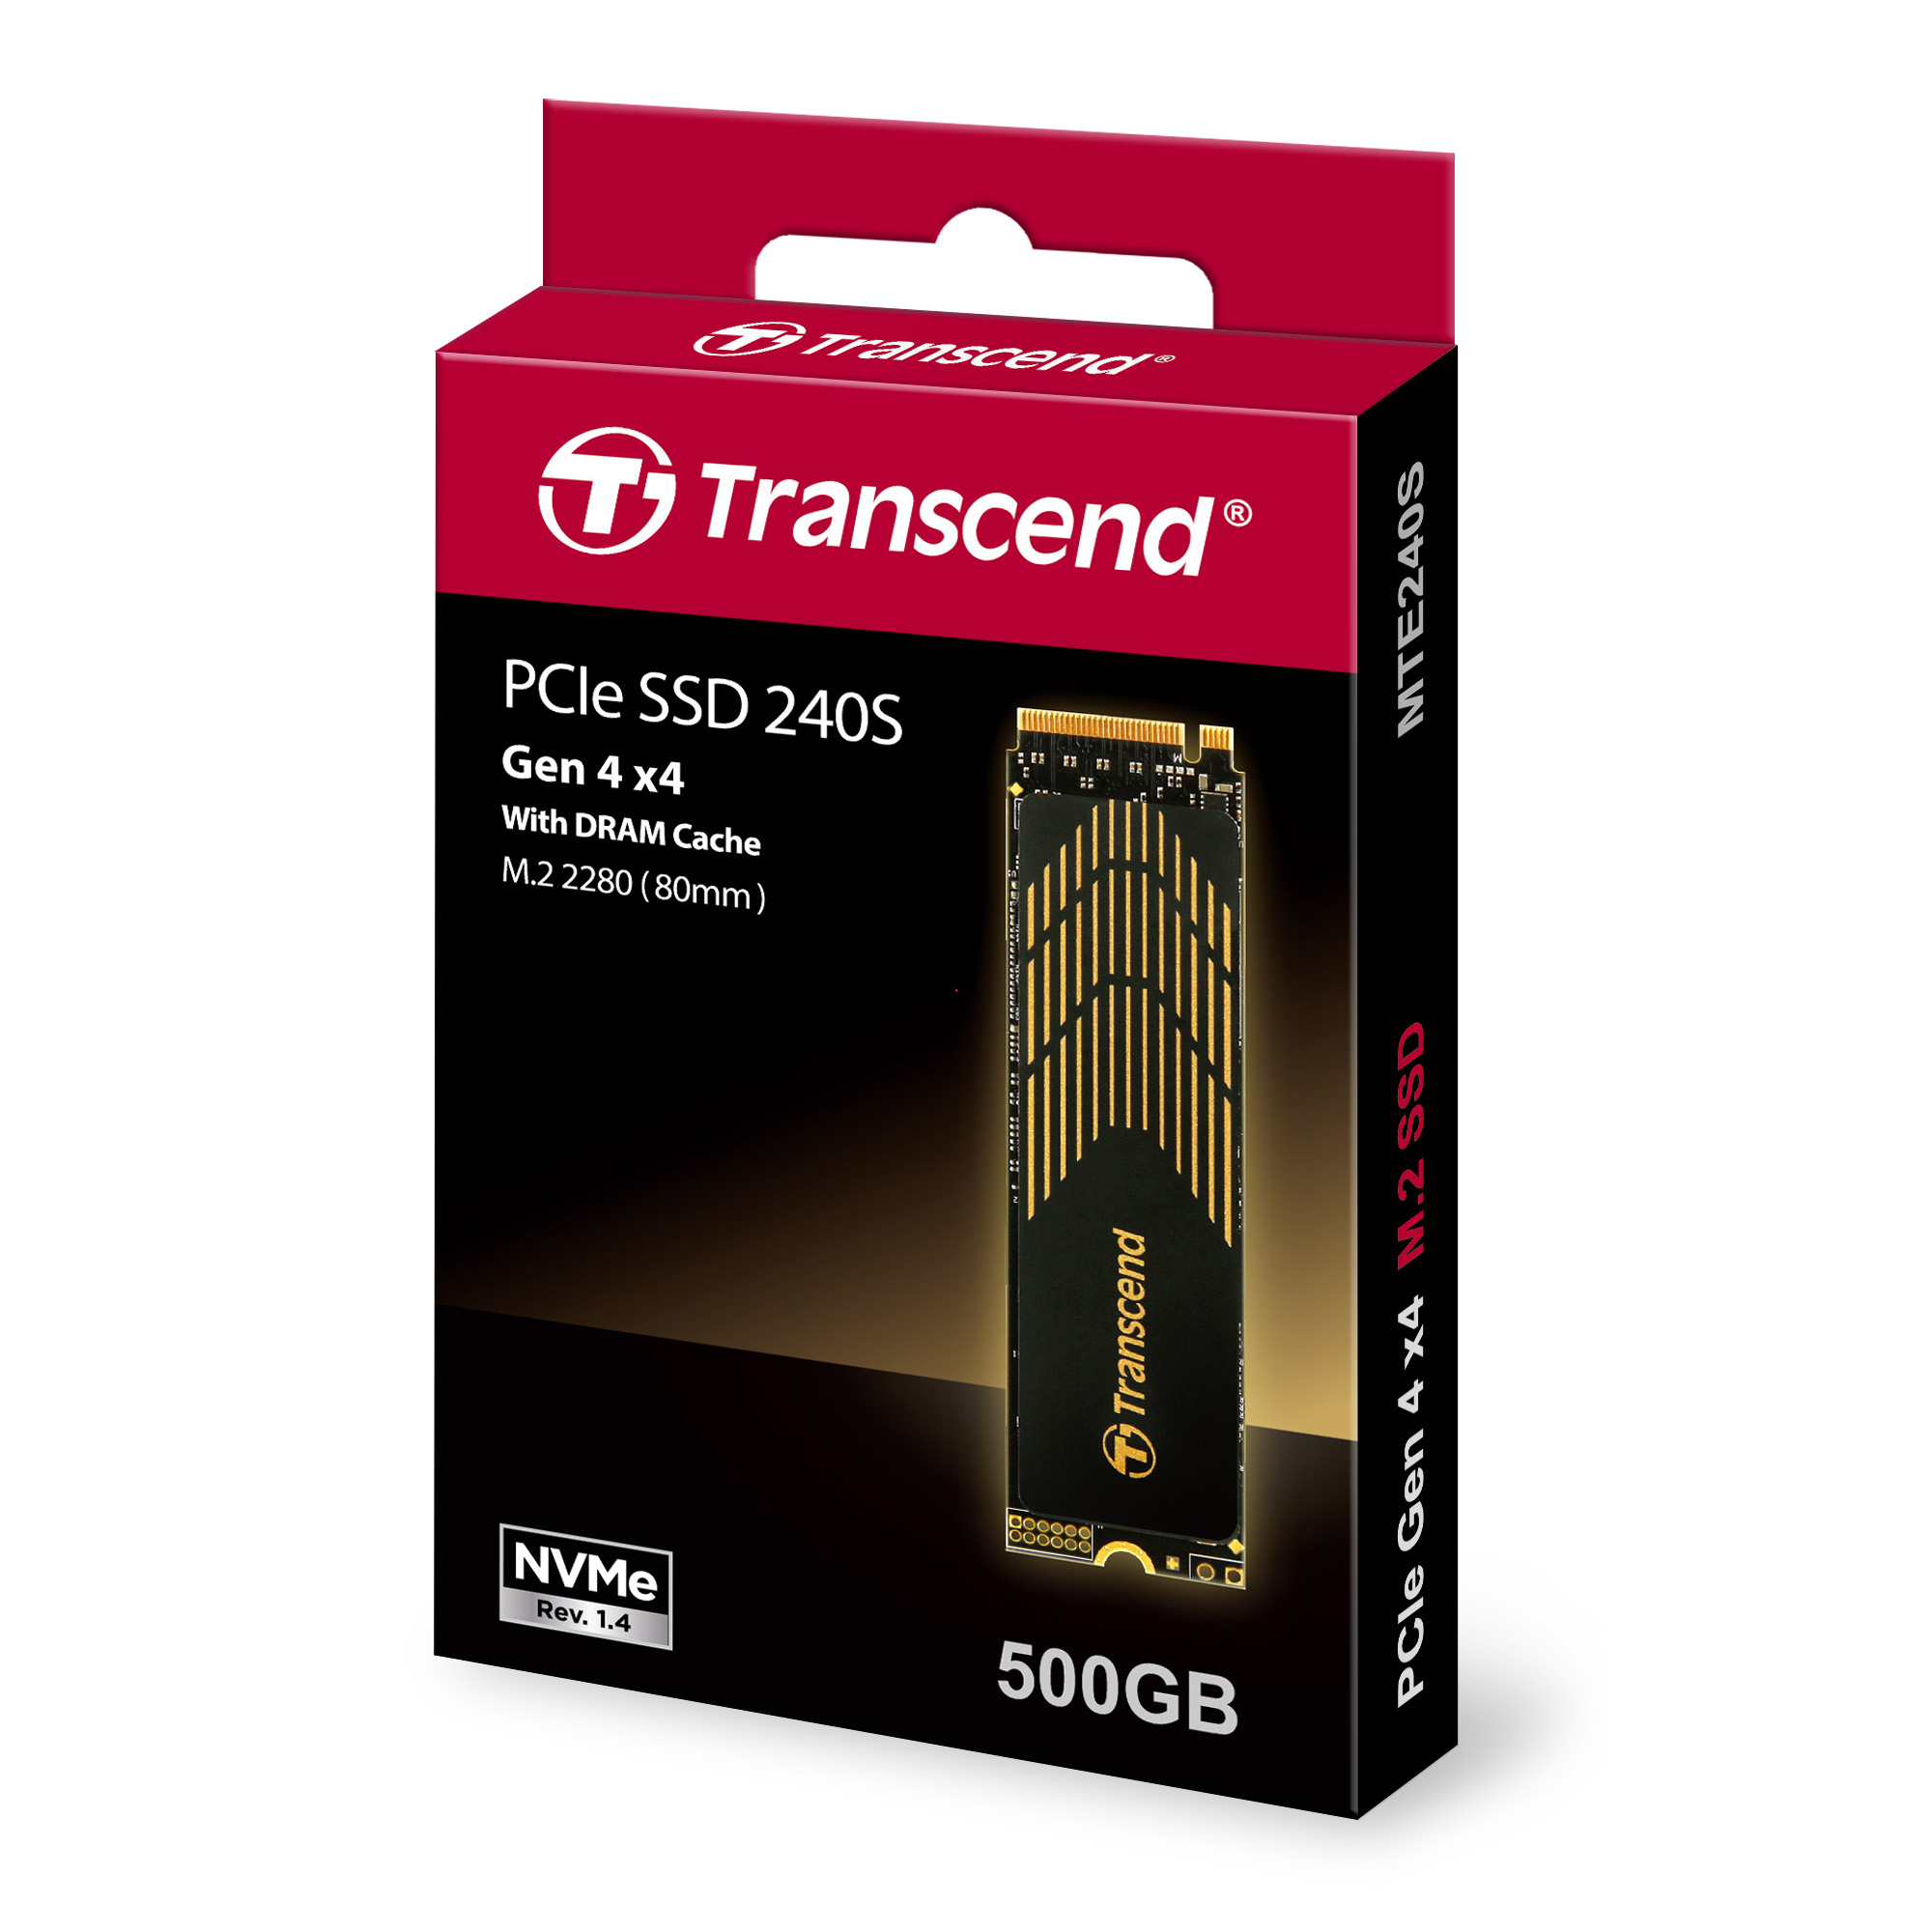 Transcend 512GB MTE110S NVMe PCIe M.2 SSD Gen 3 x4 2280 M-key, 3D